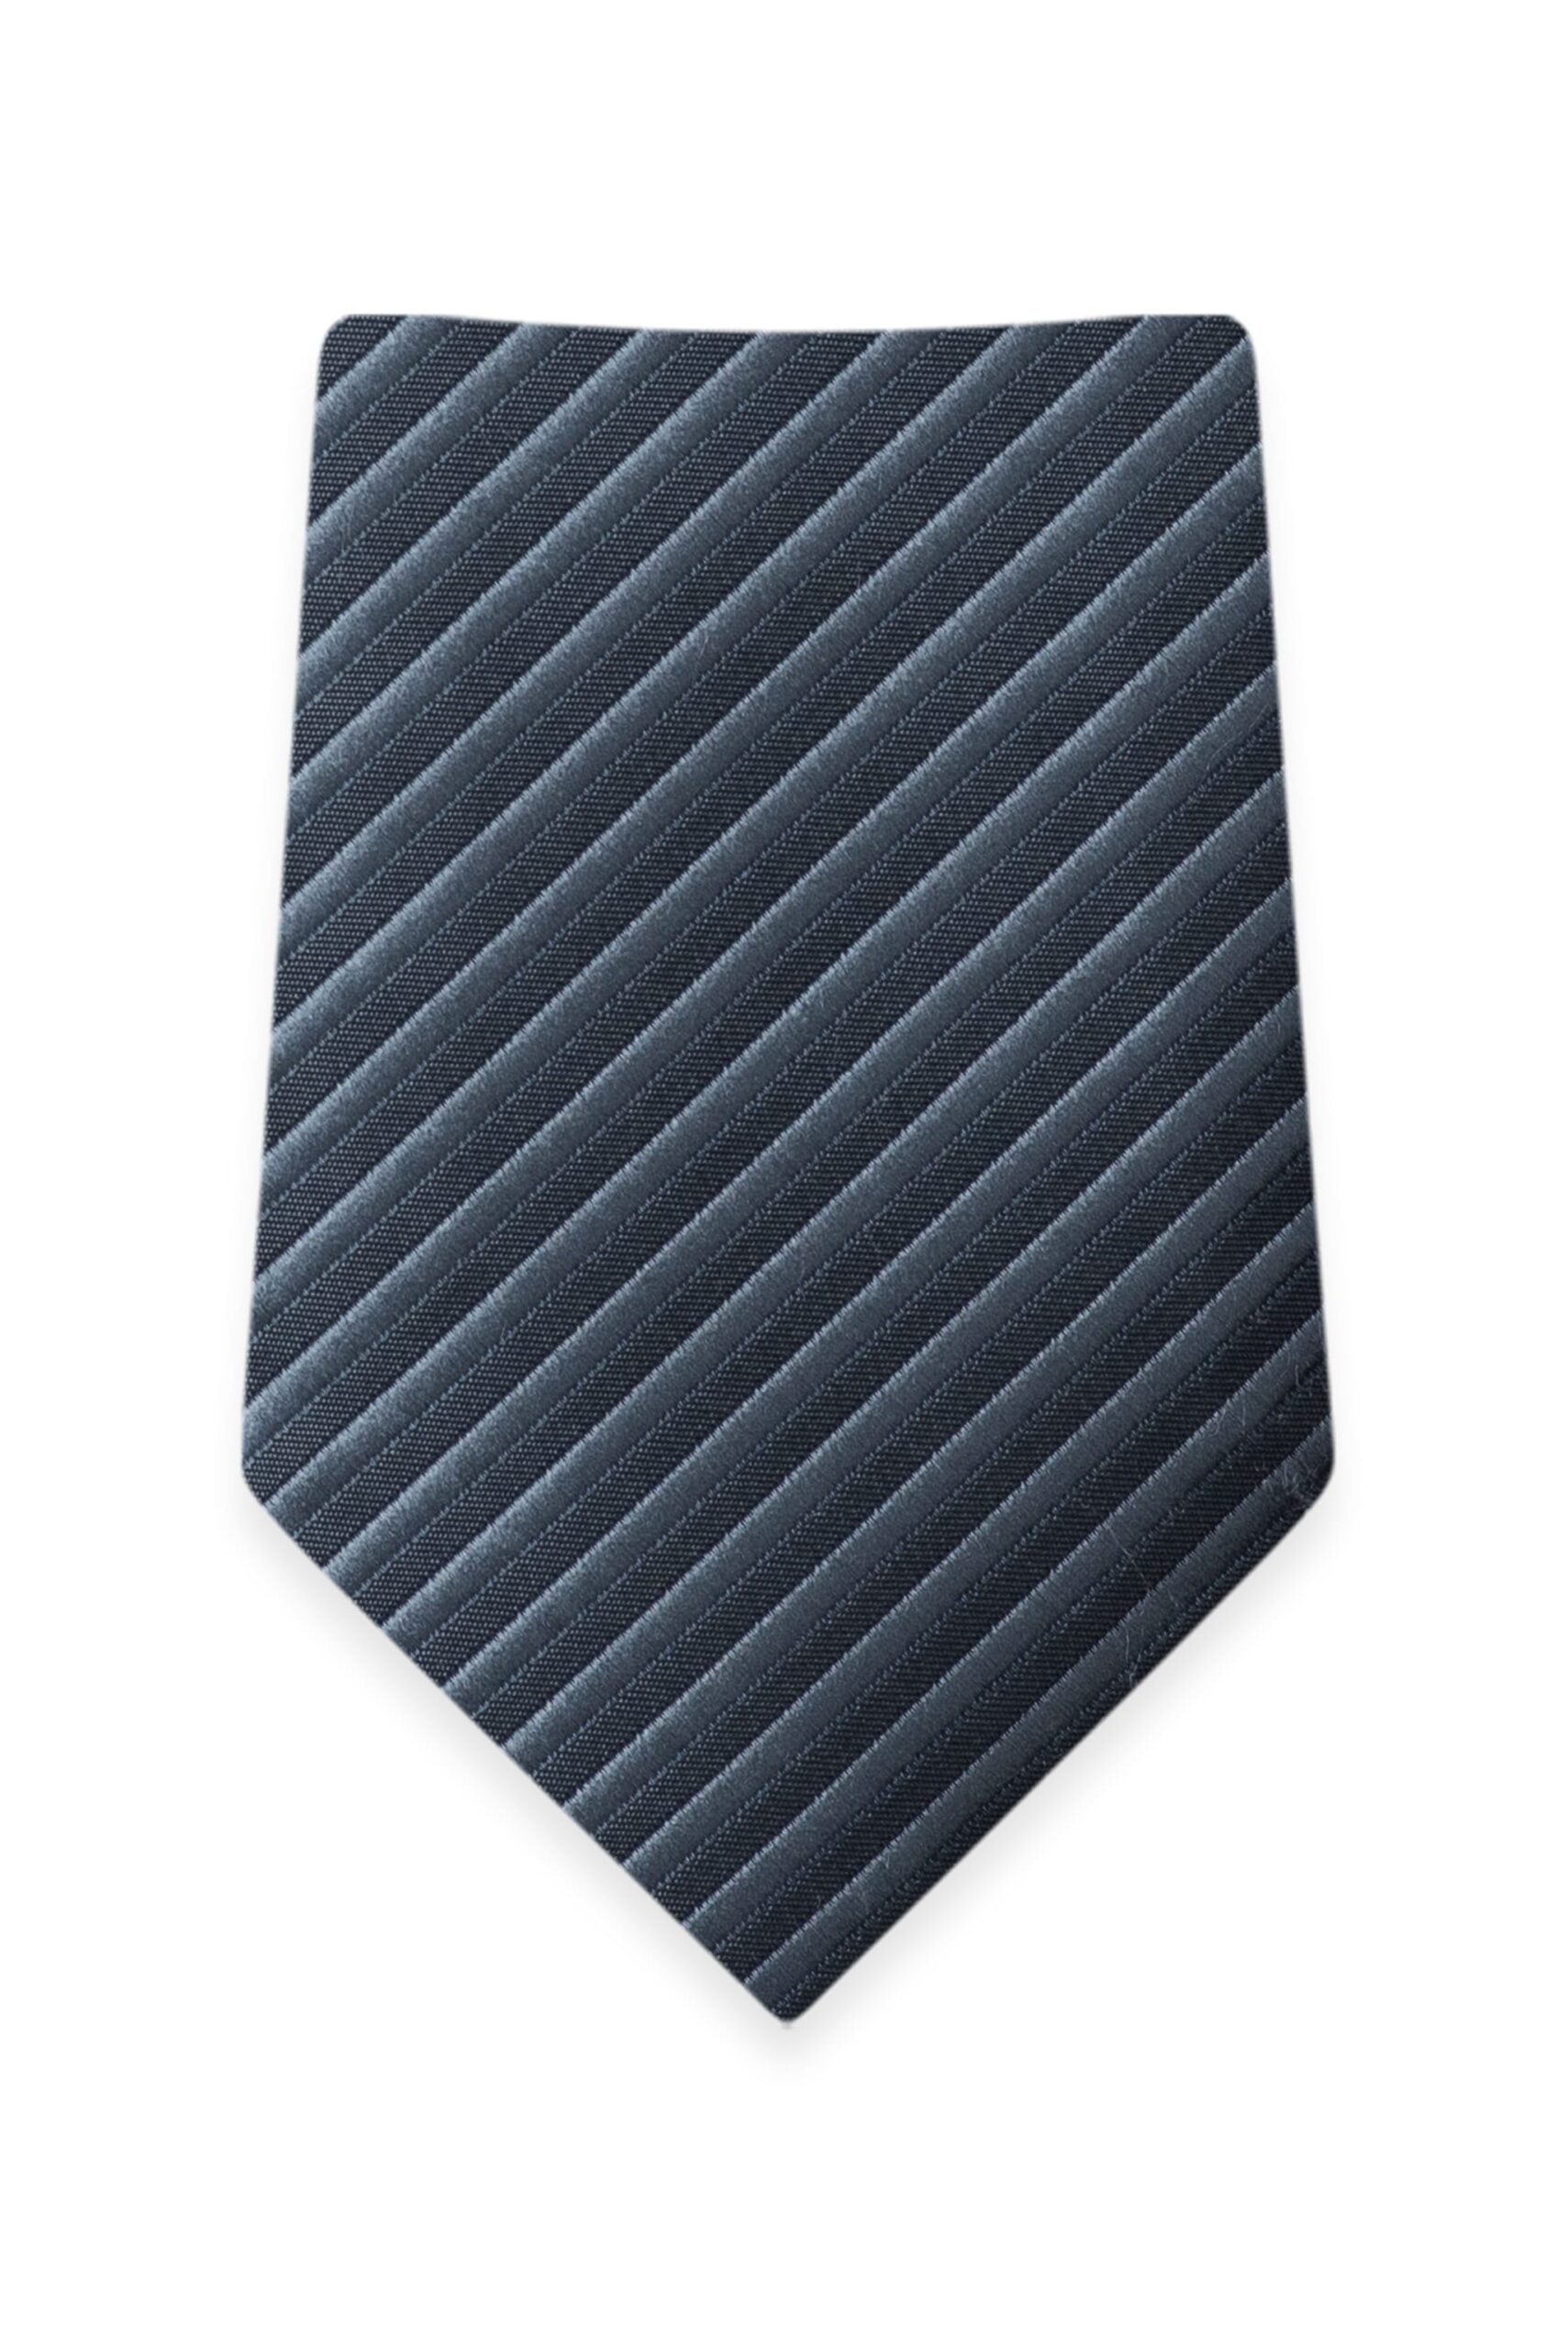 Striped Slate Blue Self-Tie Windsor Tie 1